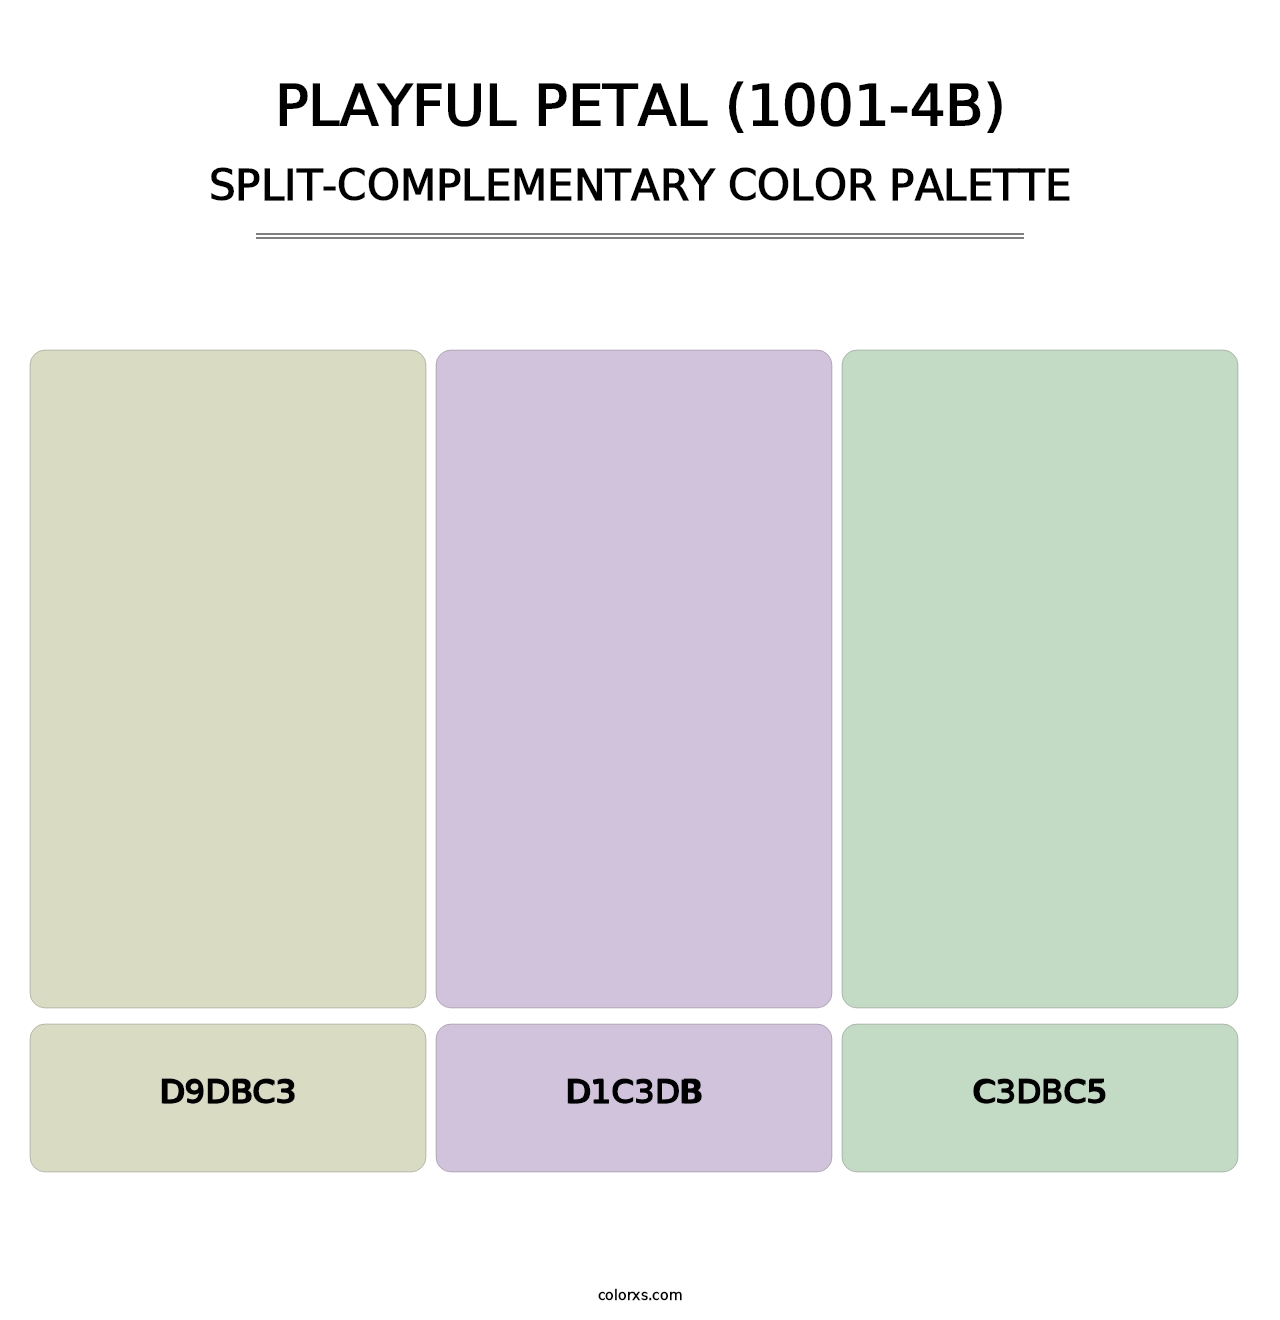 Playful Petal (1001-4B) - Split-Complementary Color Palette